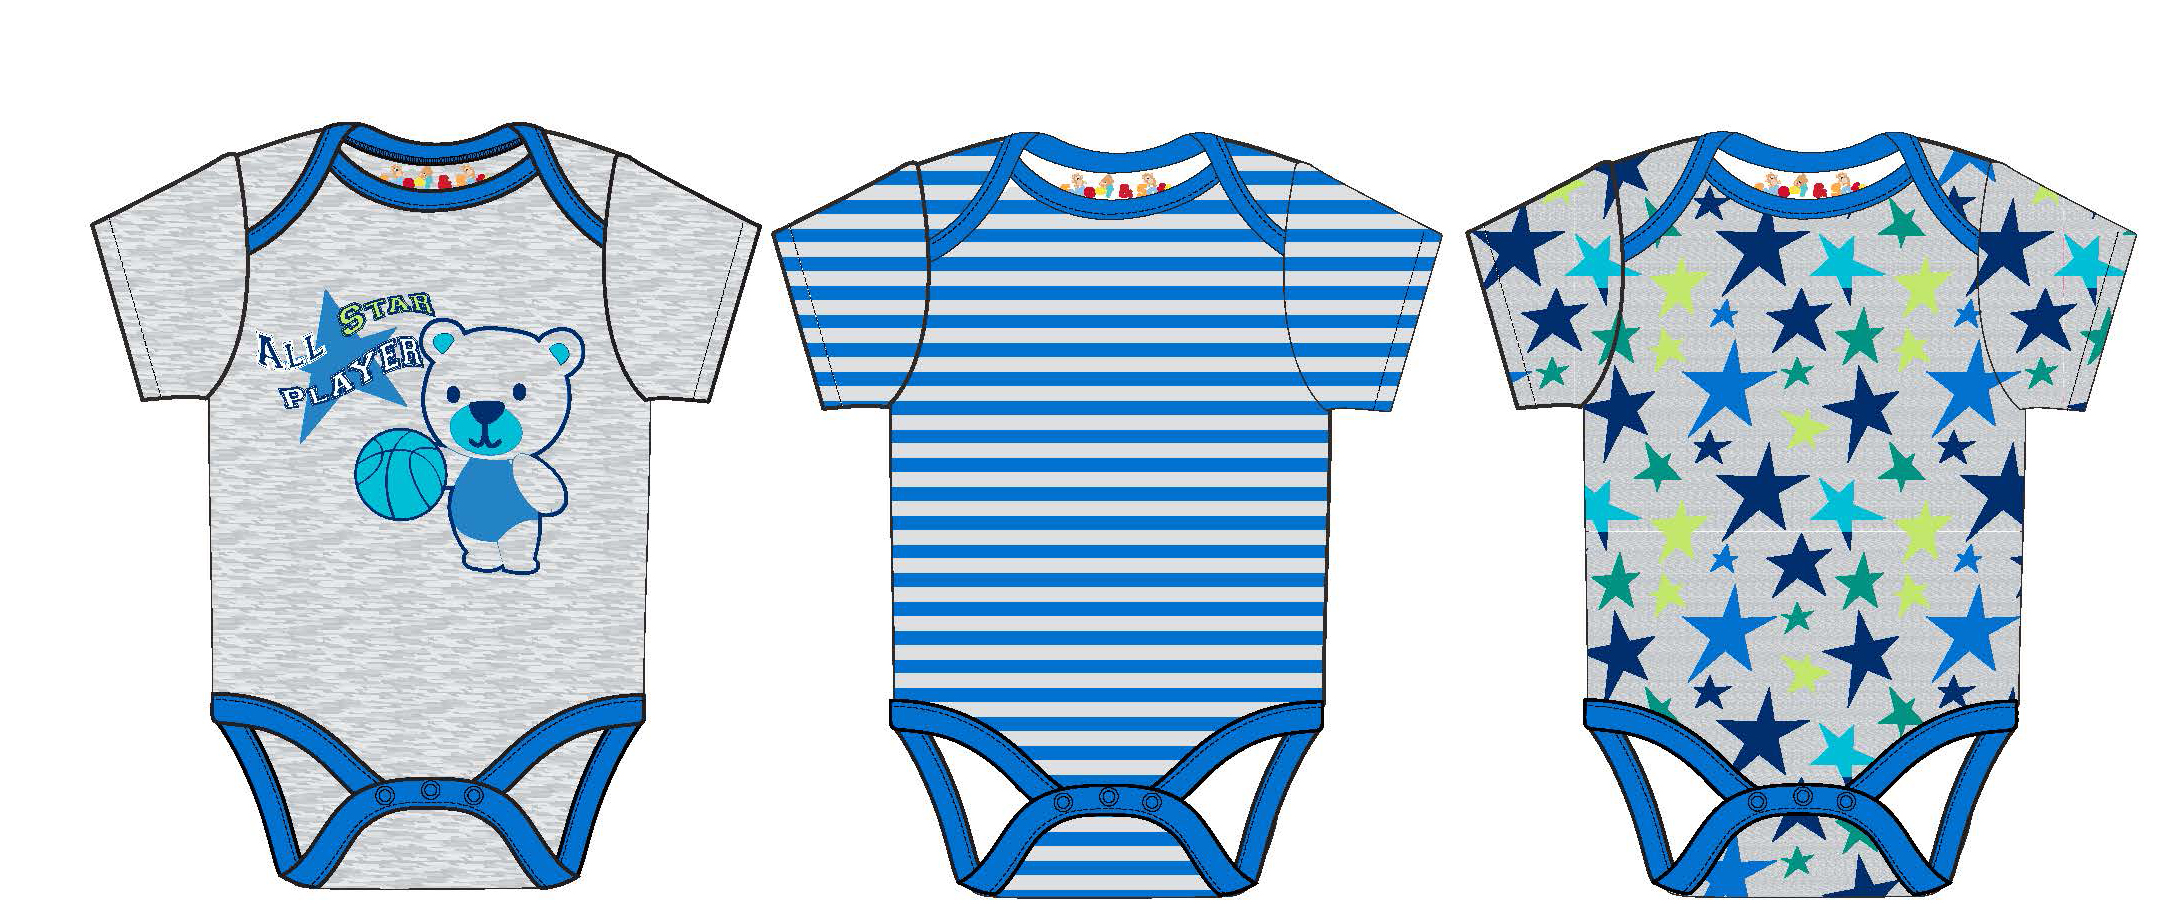 Baby Boy's Printed Short-Sleeve Onesie w/ Striped & All Star Bear Print - Sizes 0/3M-9M